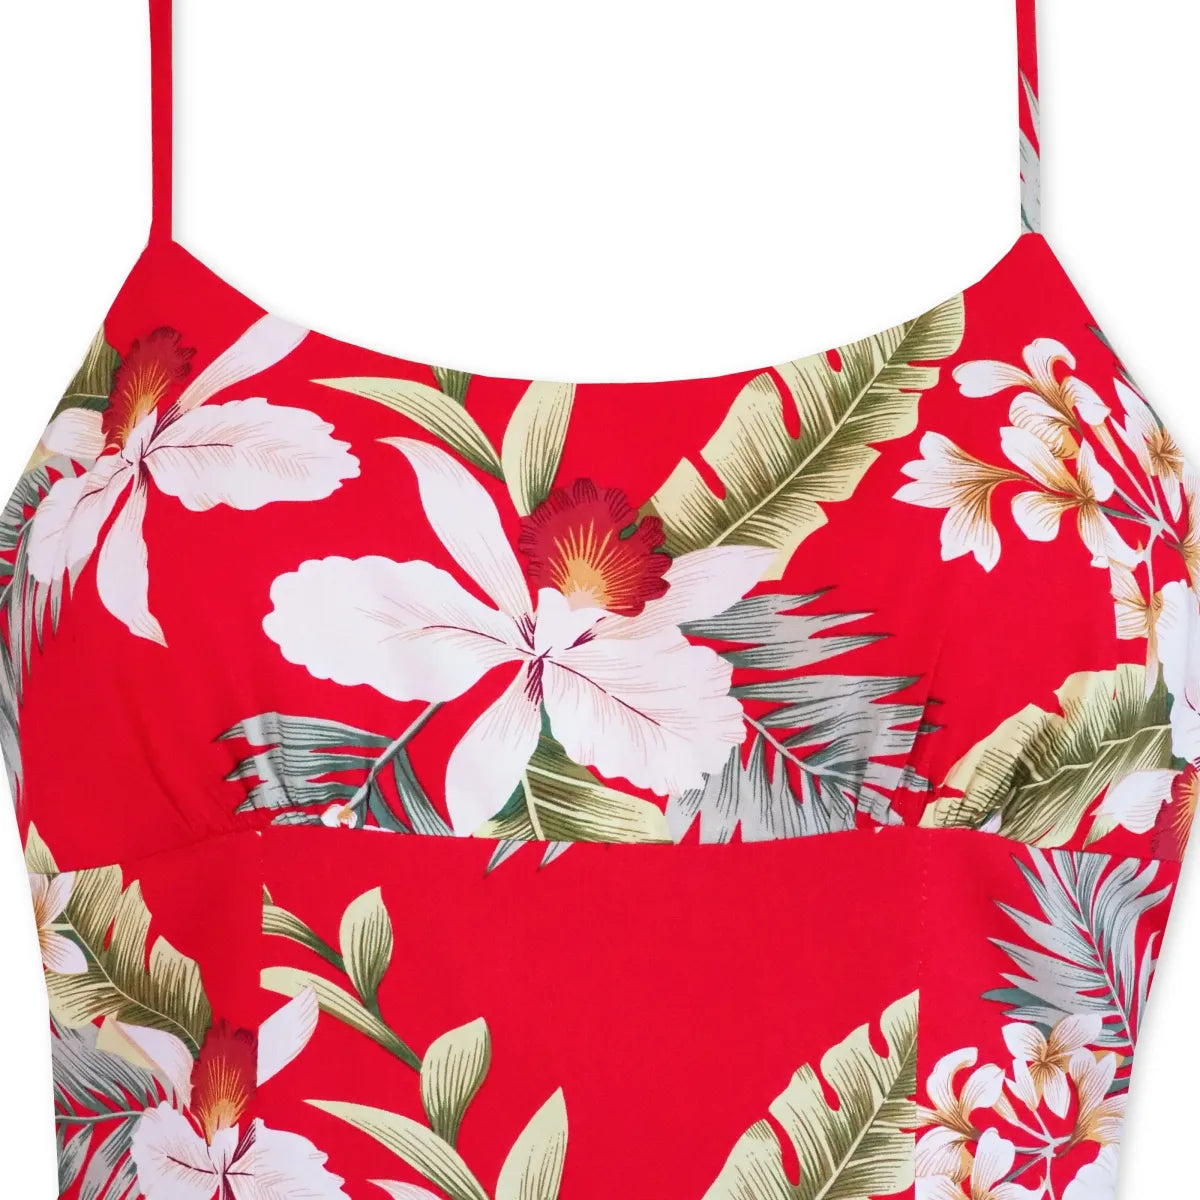 Volcanic red short skinny straps hawaiian dress